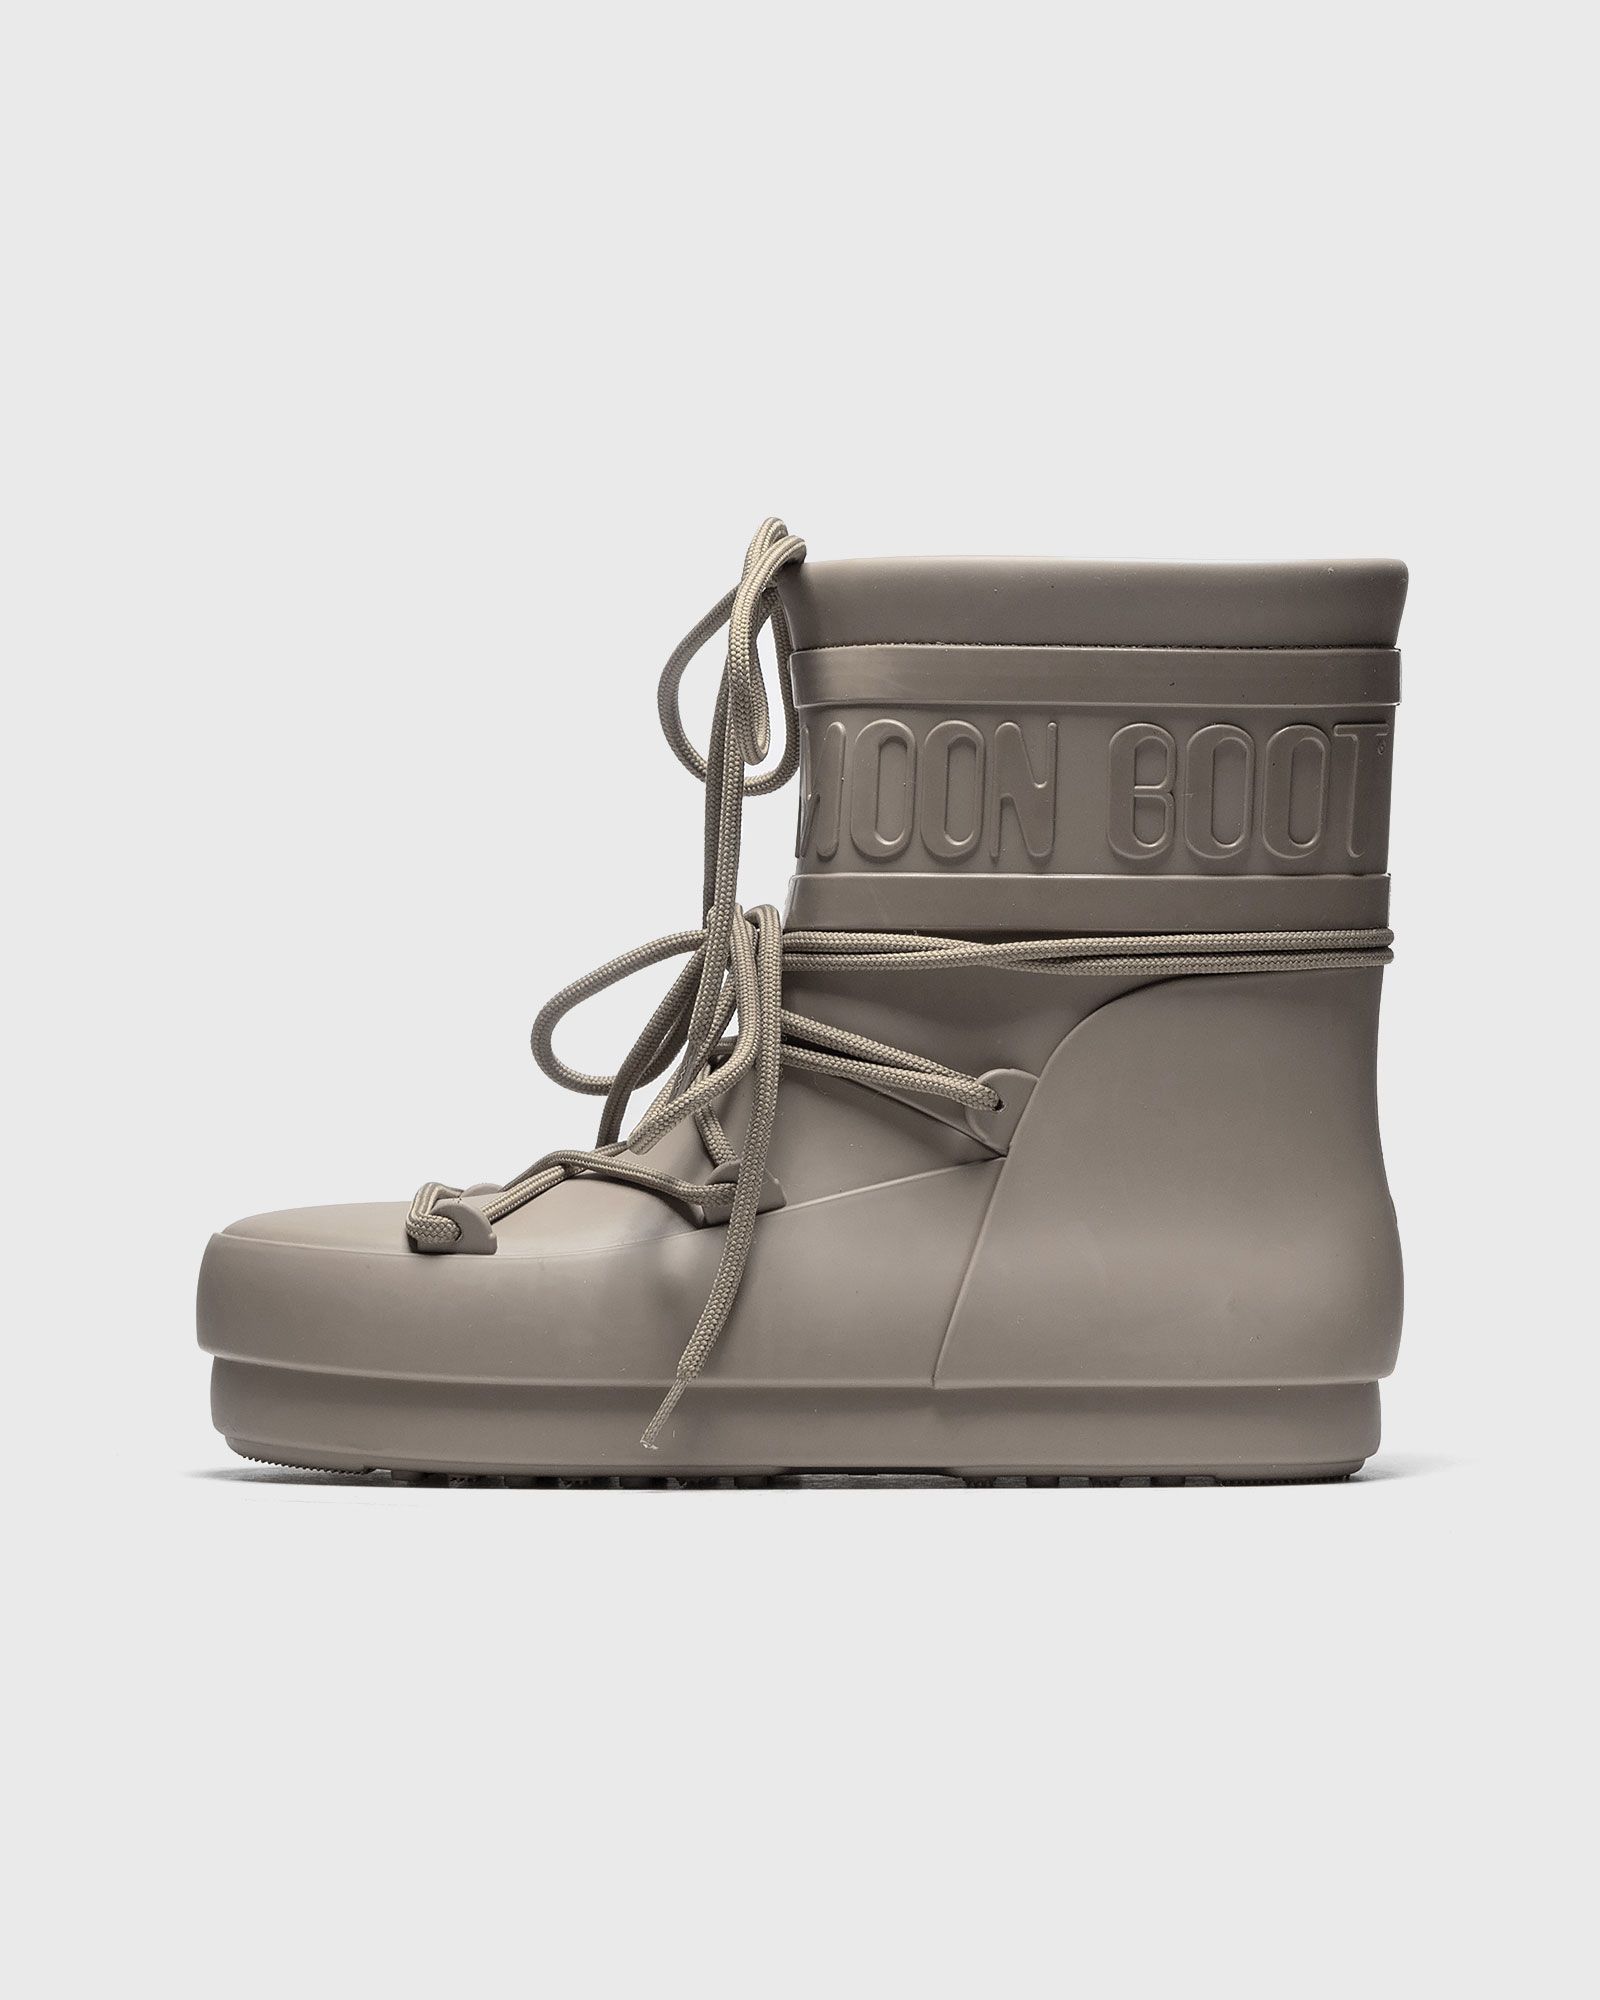 Moon Boot - rain boots low women boots grey in größe:39-40